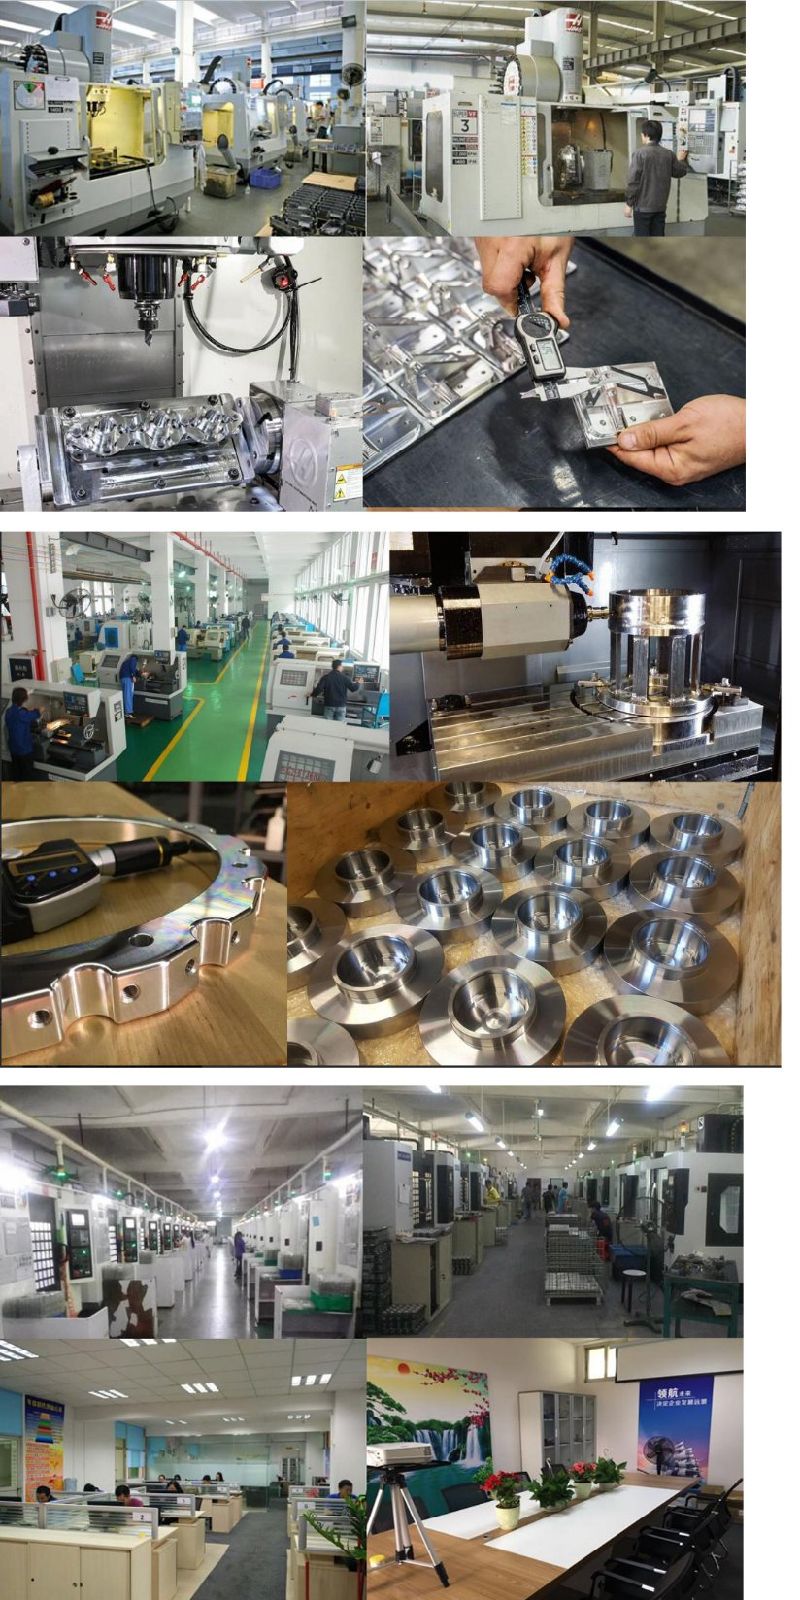 OEM Service Aluminum CNC Parts with Custom High Precision Machining